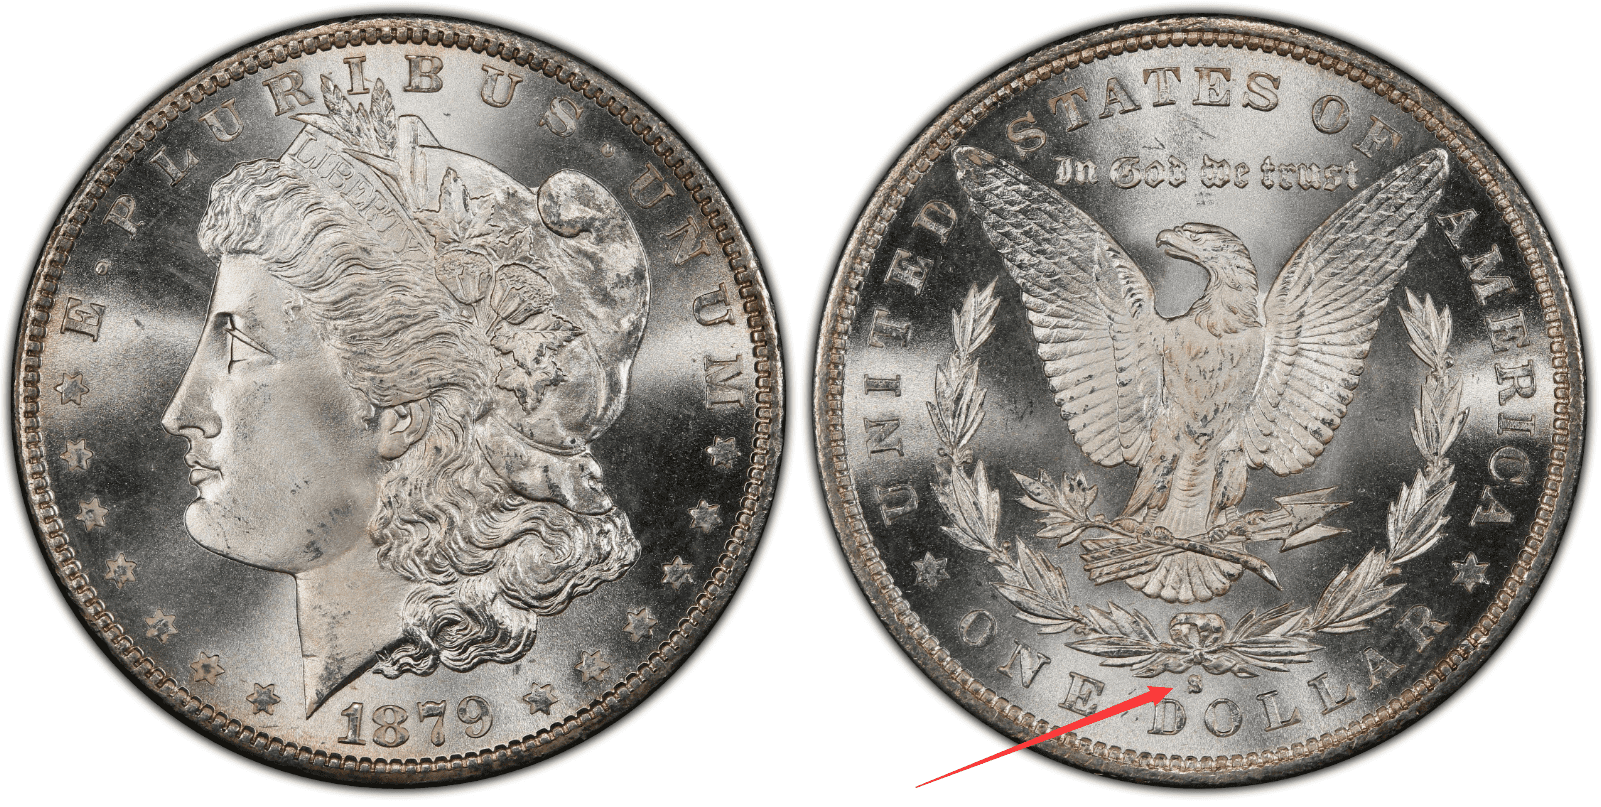 The 1879 “S” Morgan Silver Dollar Value